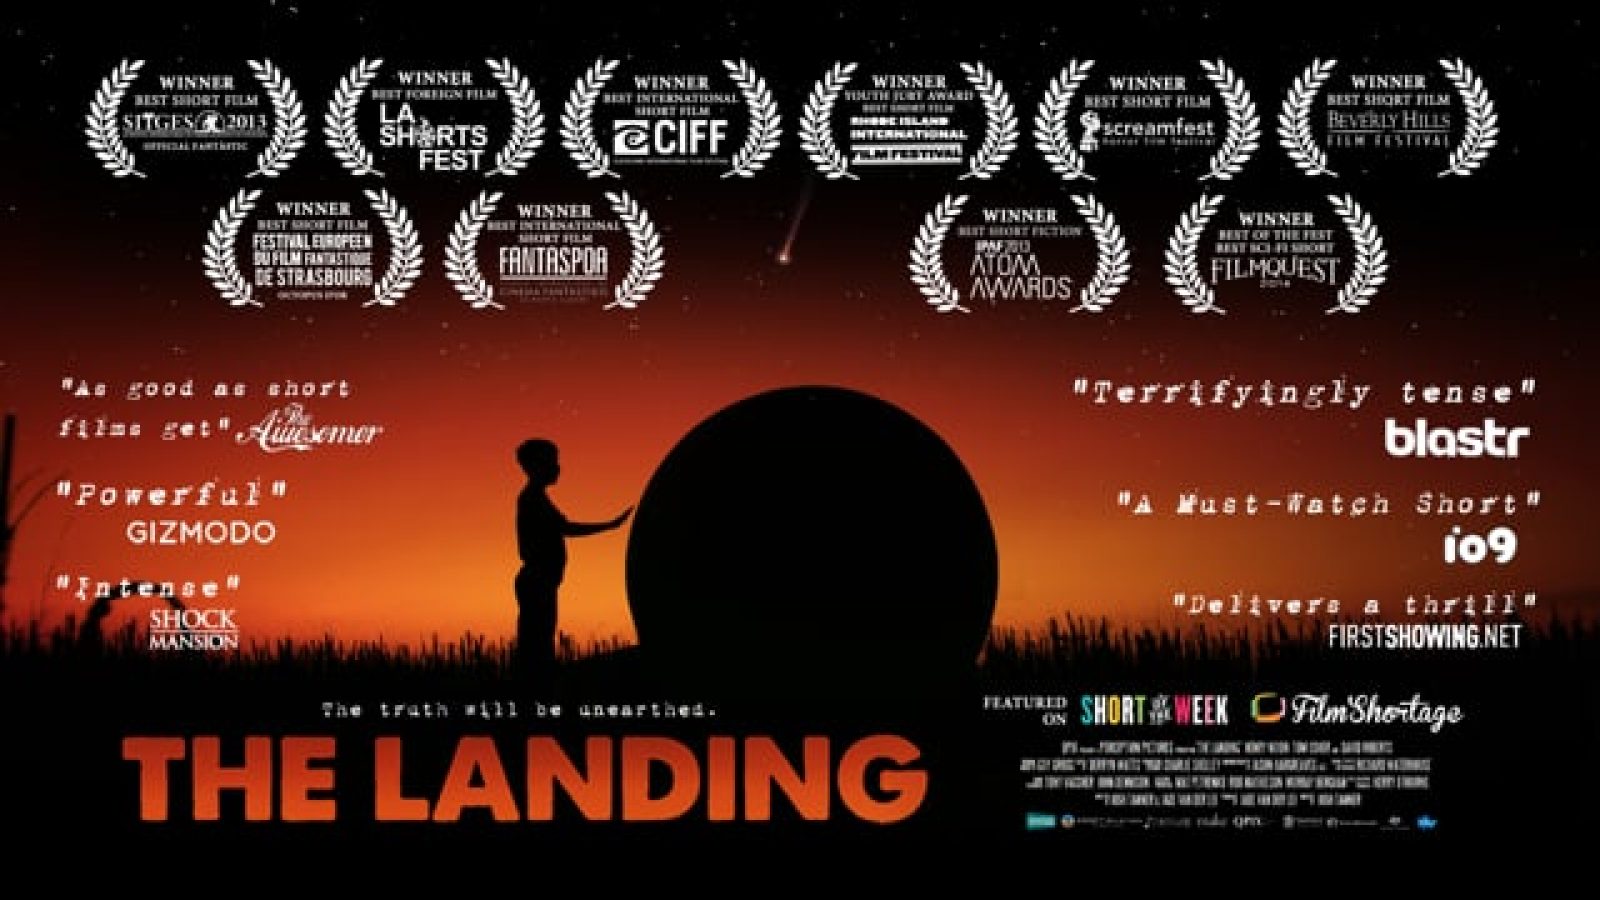 The landing